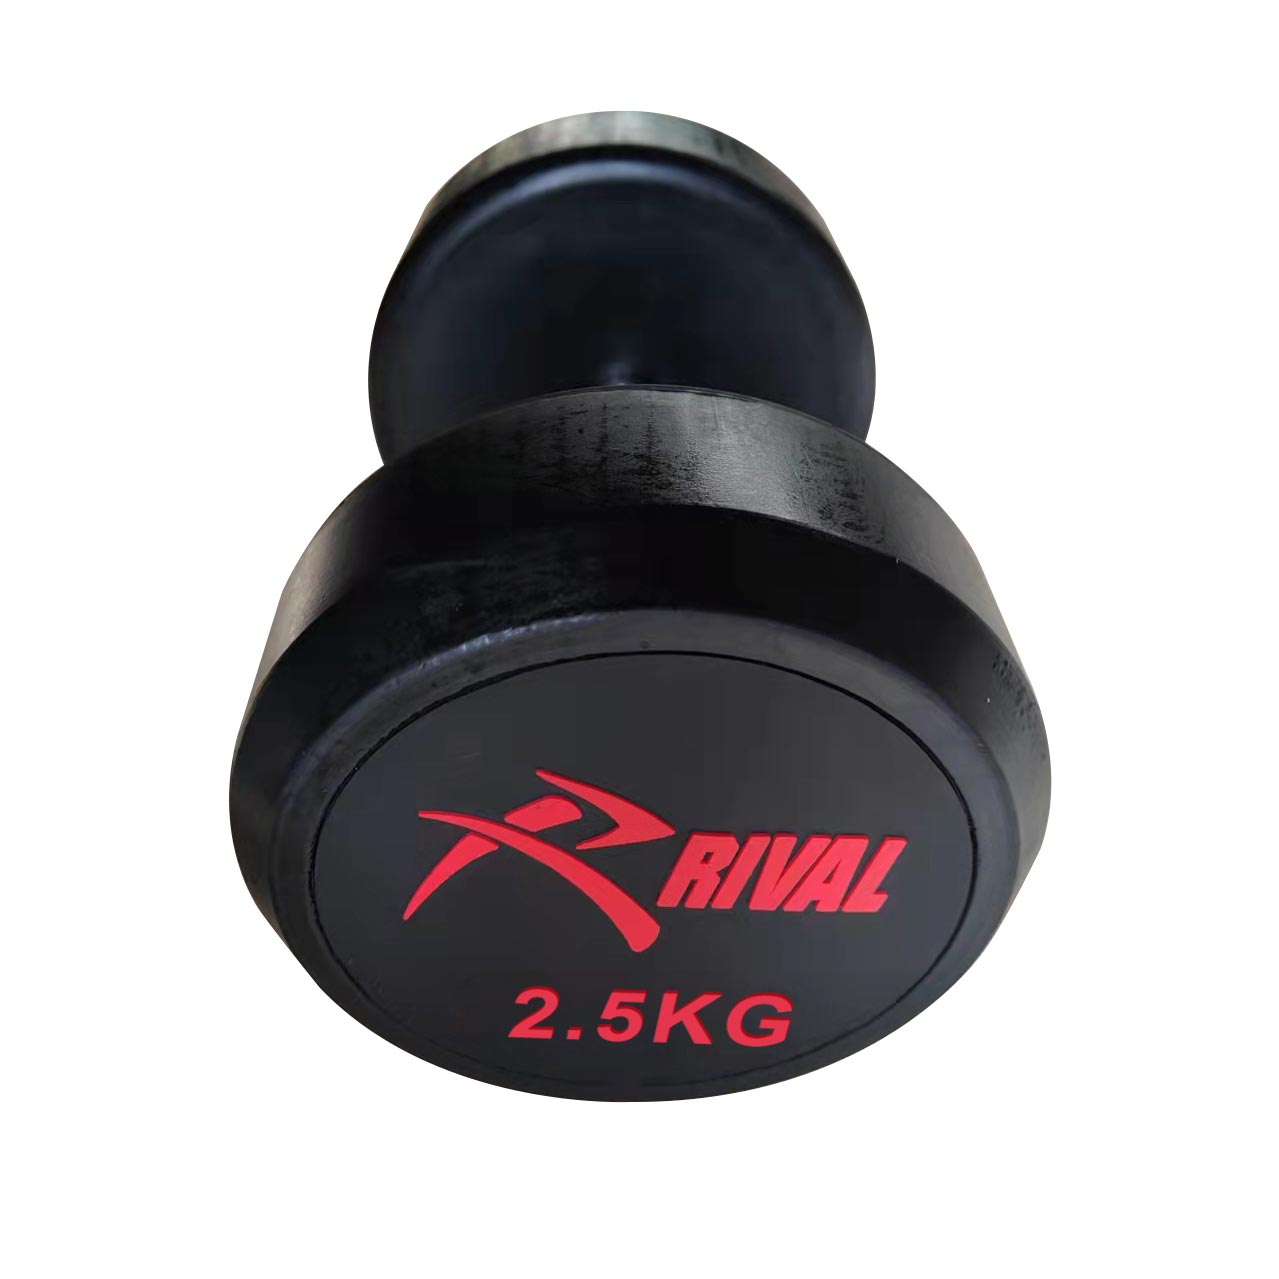 RIVAL ROUND RUBBER DUMBBELLS - 2.5KG PAIR